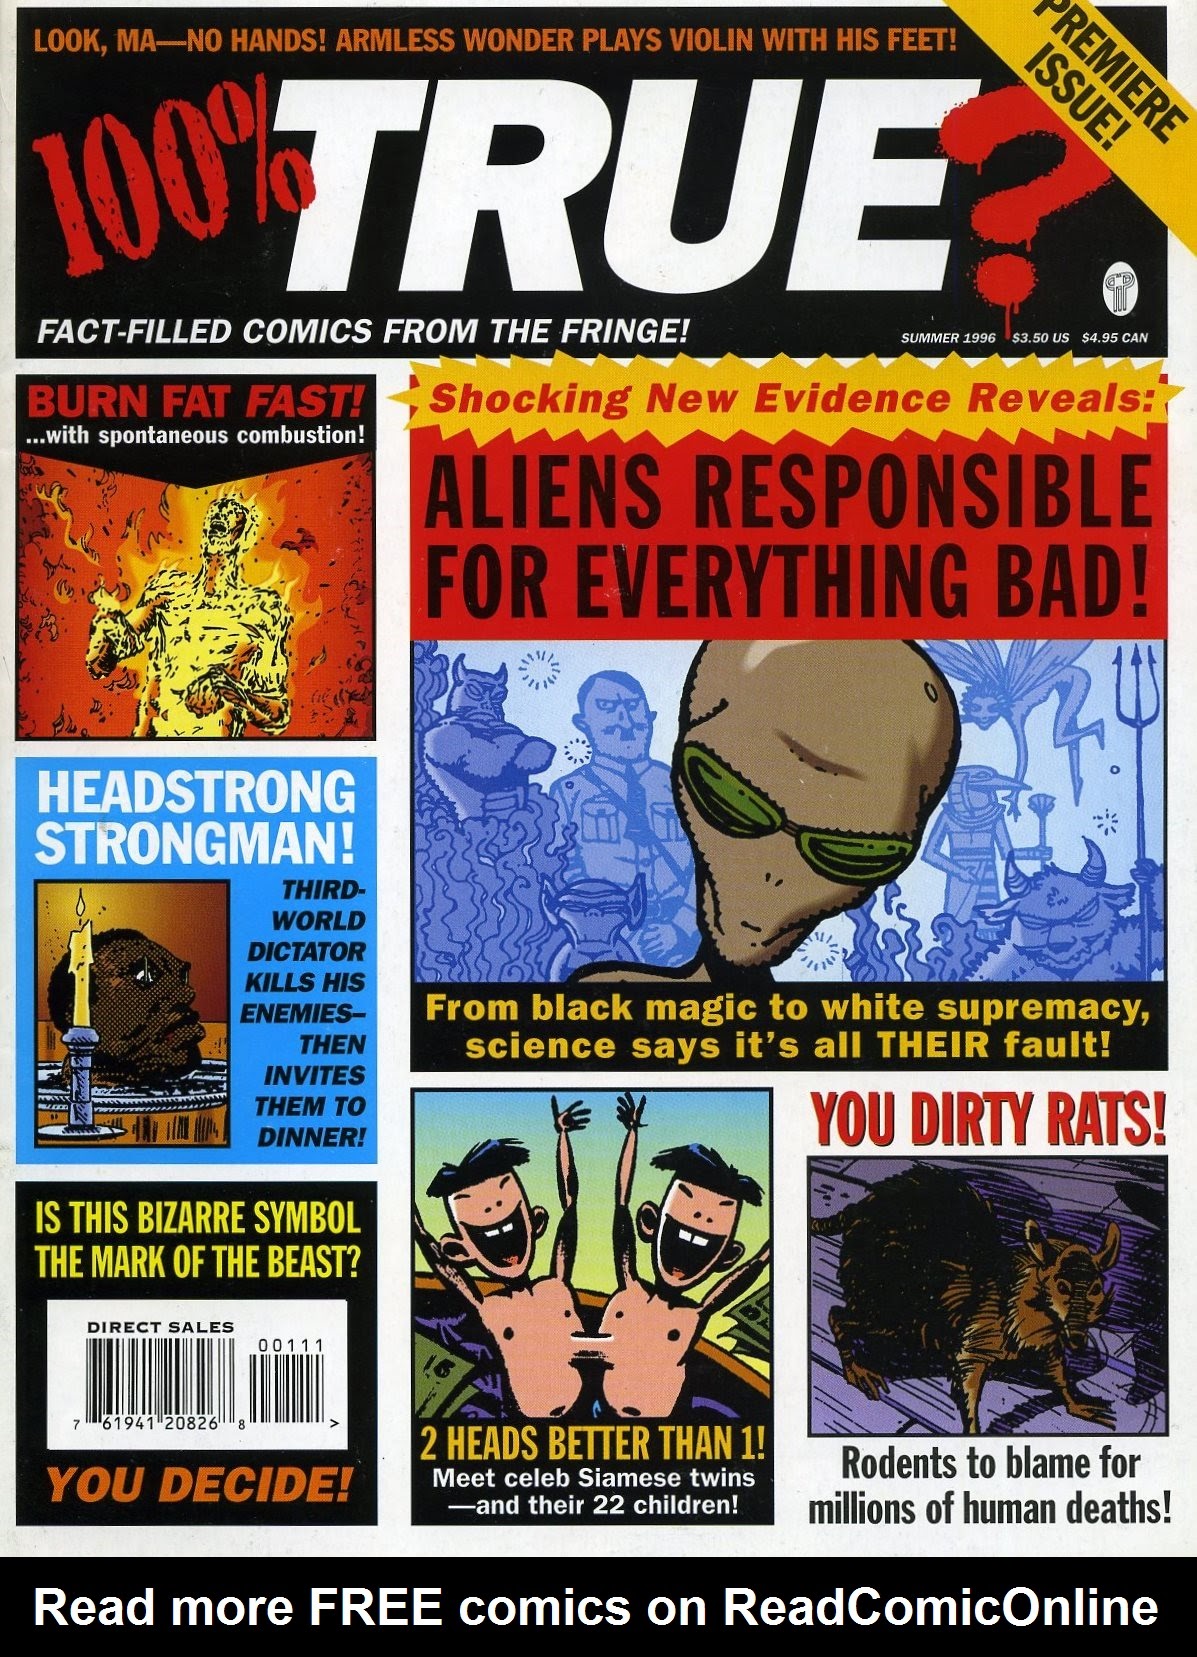 Read online 100% True comic -  Issue #1 - 1